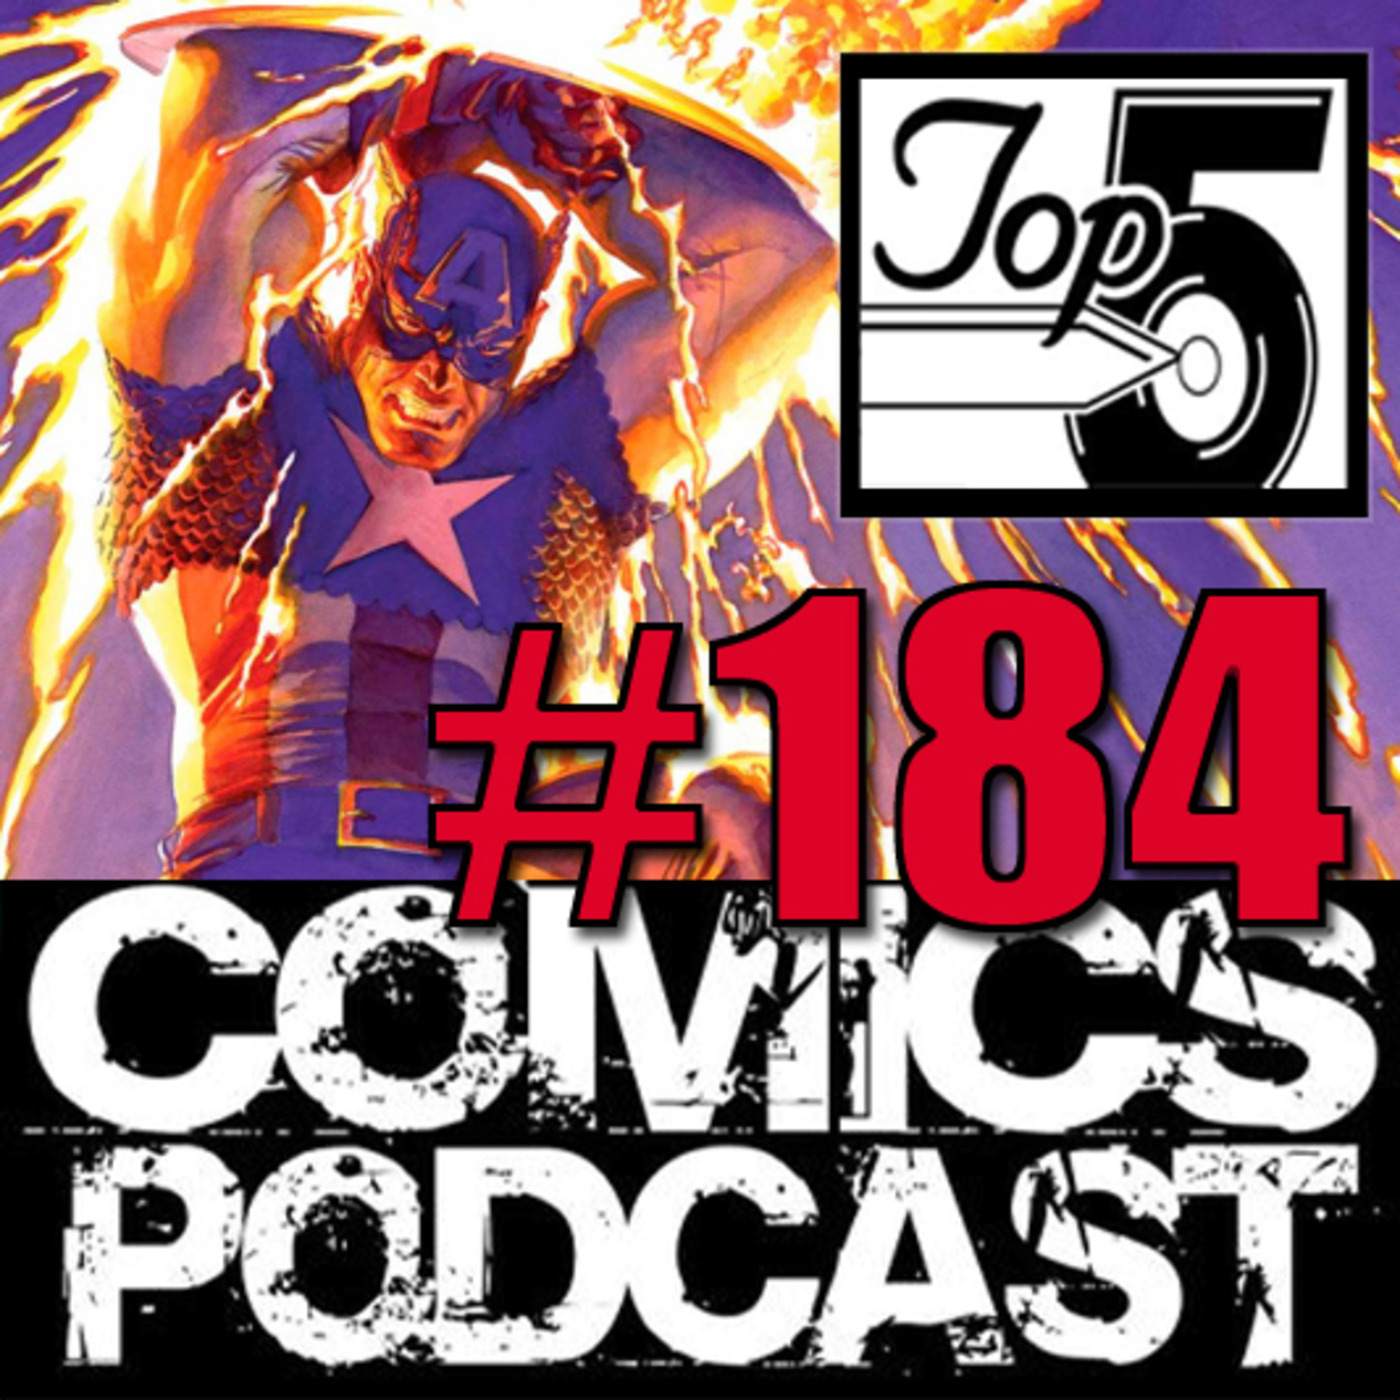 Episode 184: Top 5 Comics Podcast - Episode 184 - Batman Beyond, Alice, Captain America and interview @ Wonder Con